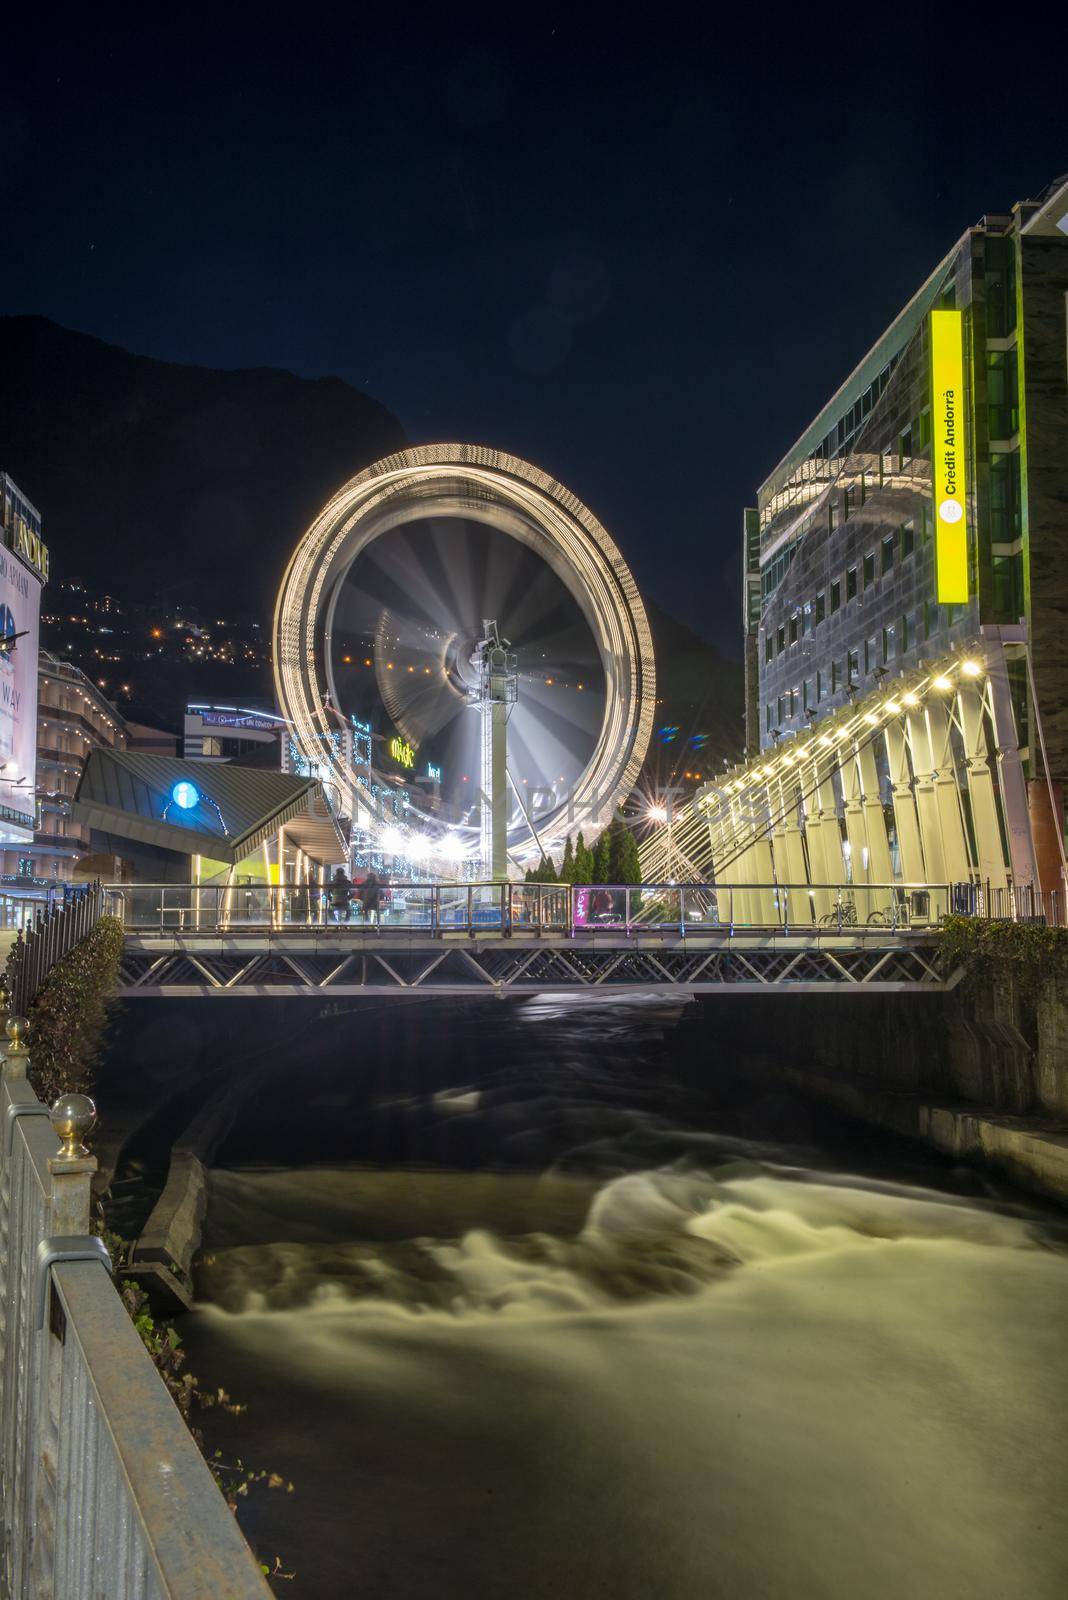 Andorra la Vella, Andorra : 2020 October 30 : Ferris wheel in the City of Andorra La Vella, capital of Andorra in the Pyrenees in autumn 2020.